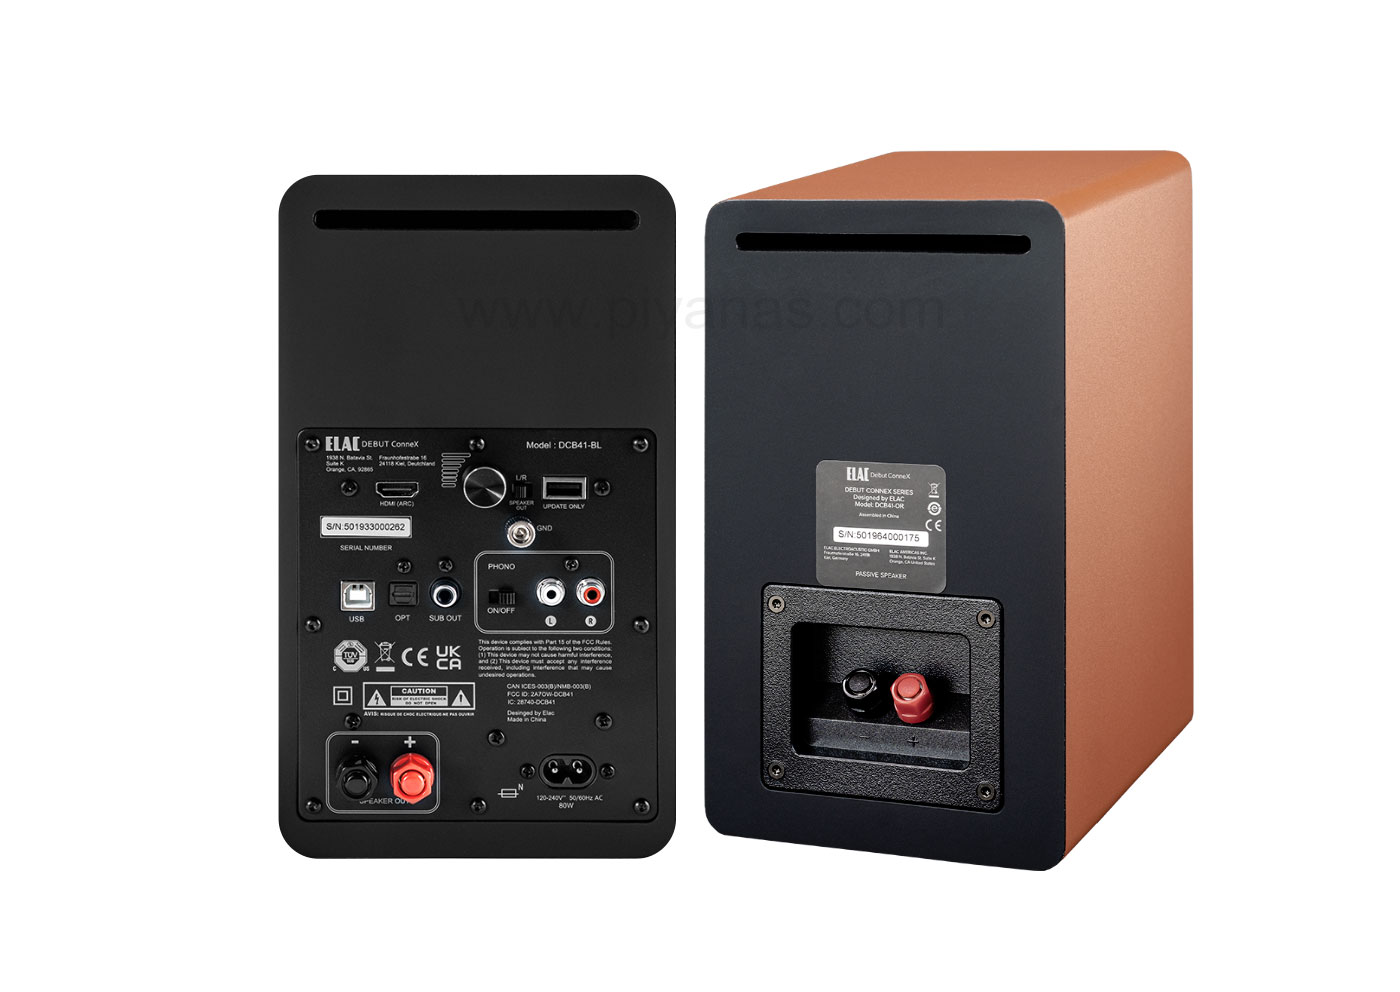 Debut Connex Dcb-41 
Powered Speakers (Orange)